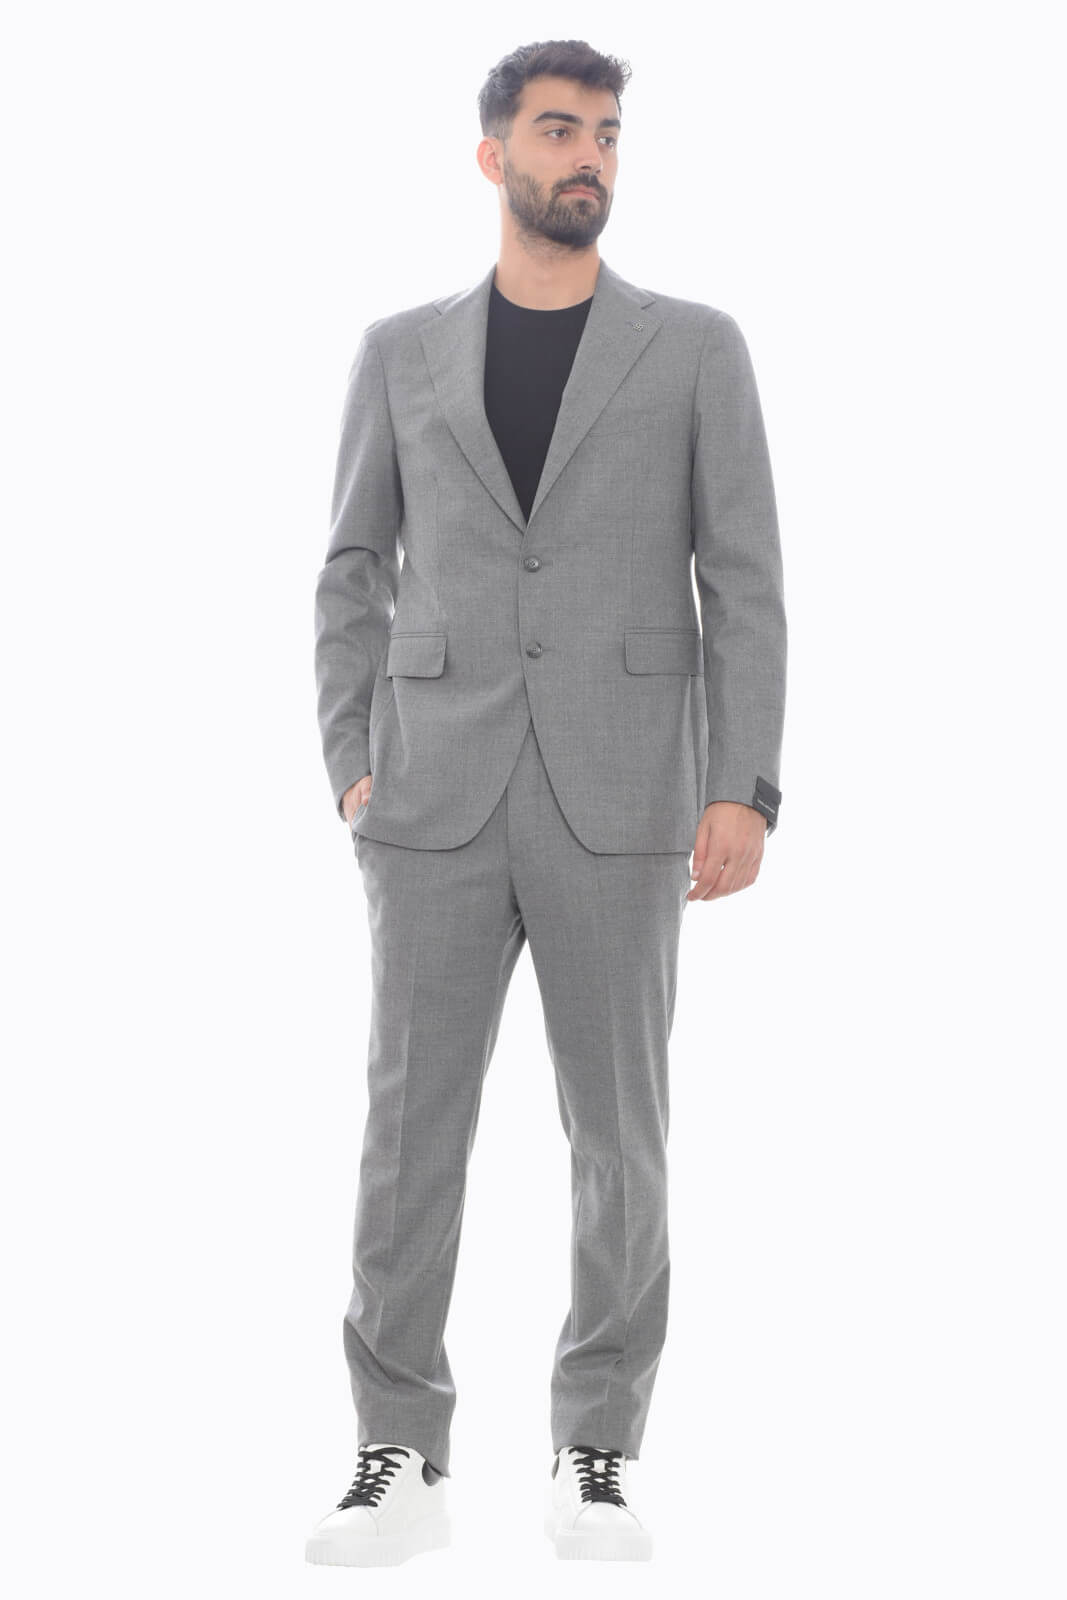 Tagliatore men's suit in solid color wool